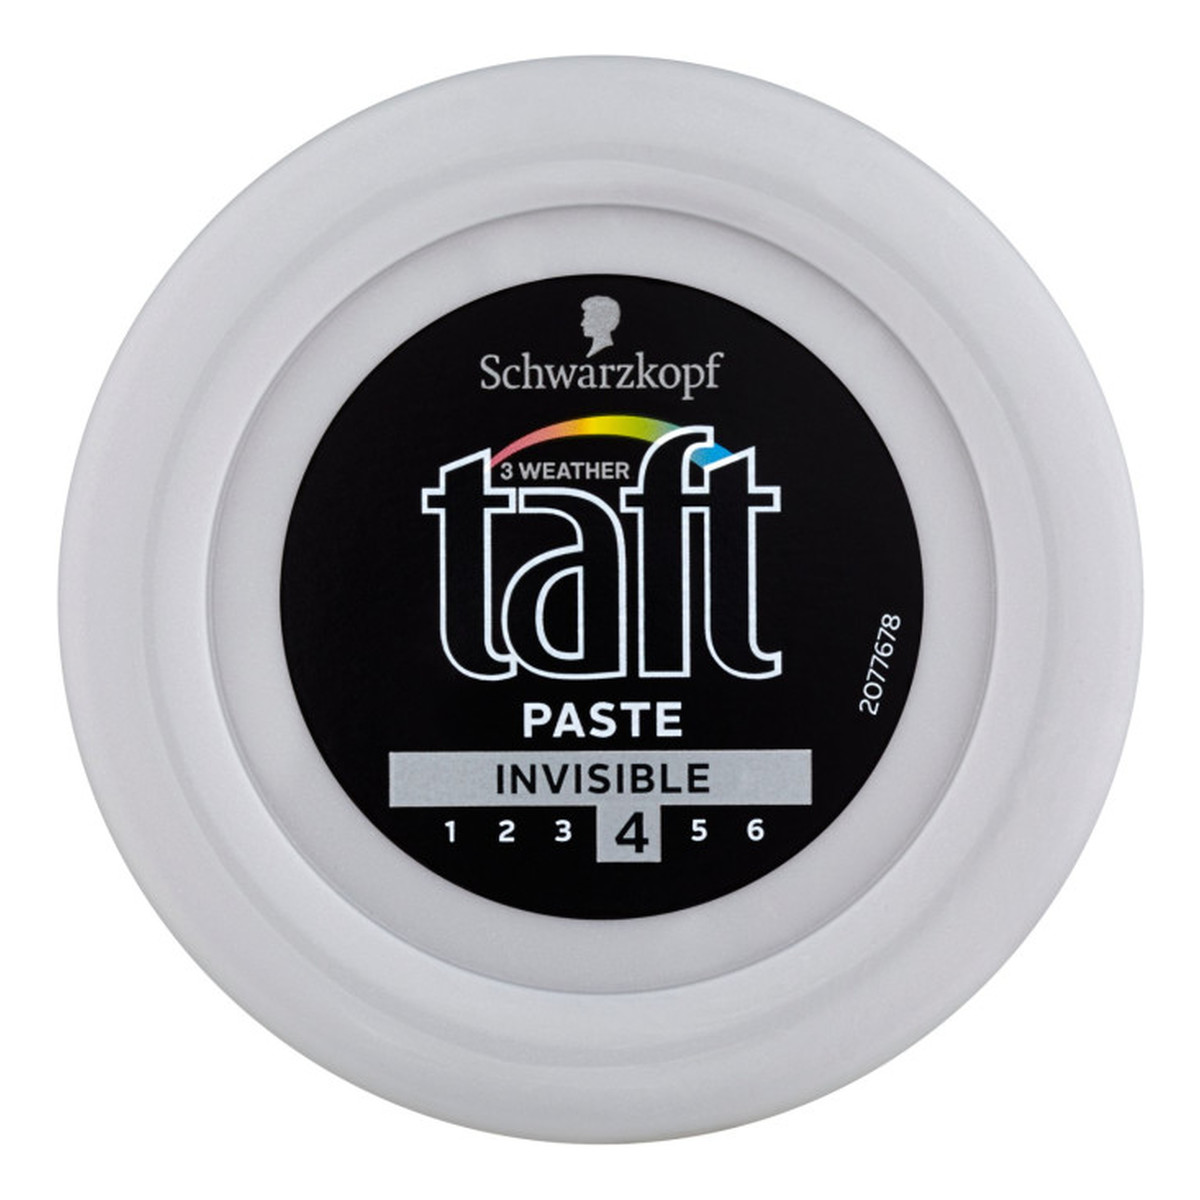 Taft INVISIBLE pasta do włosów 150ml